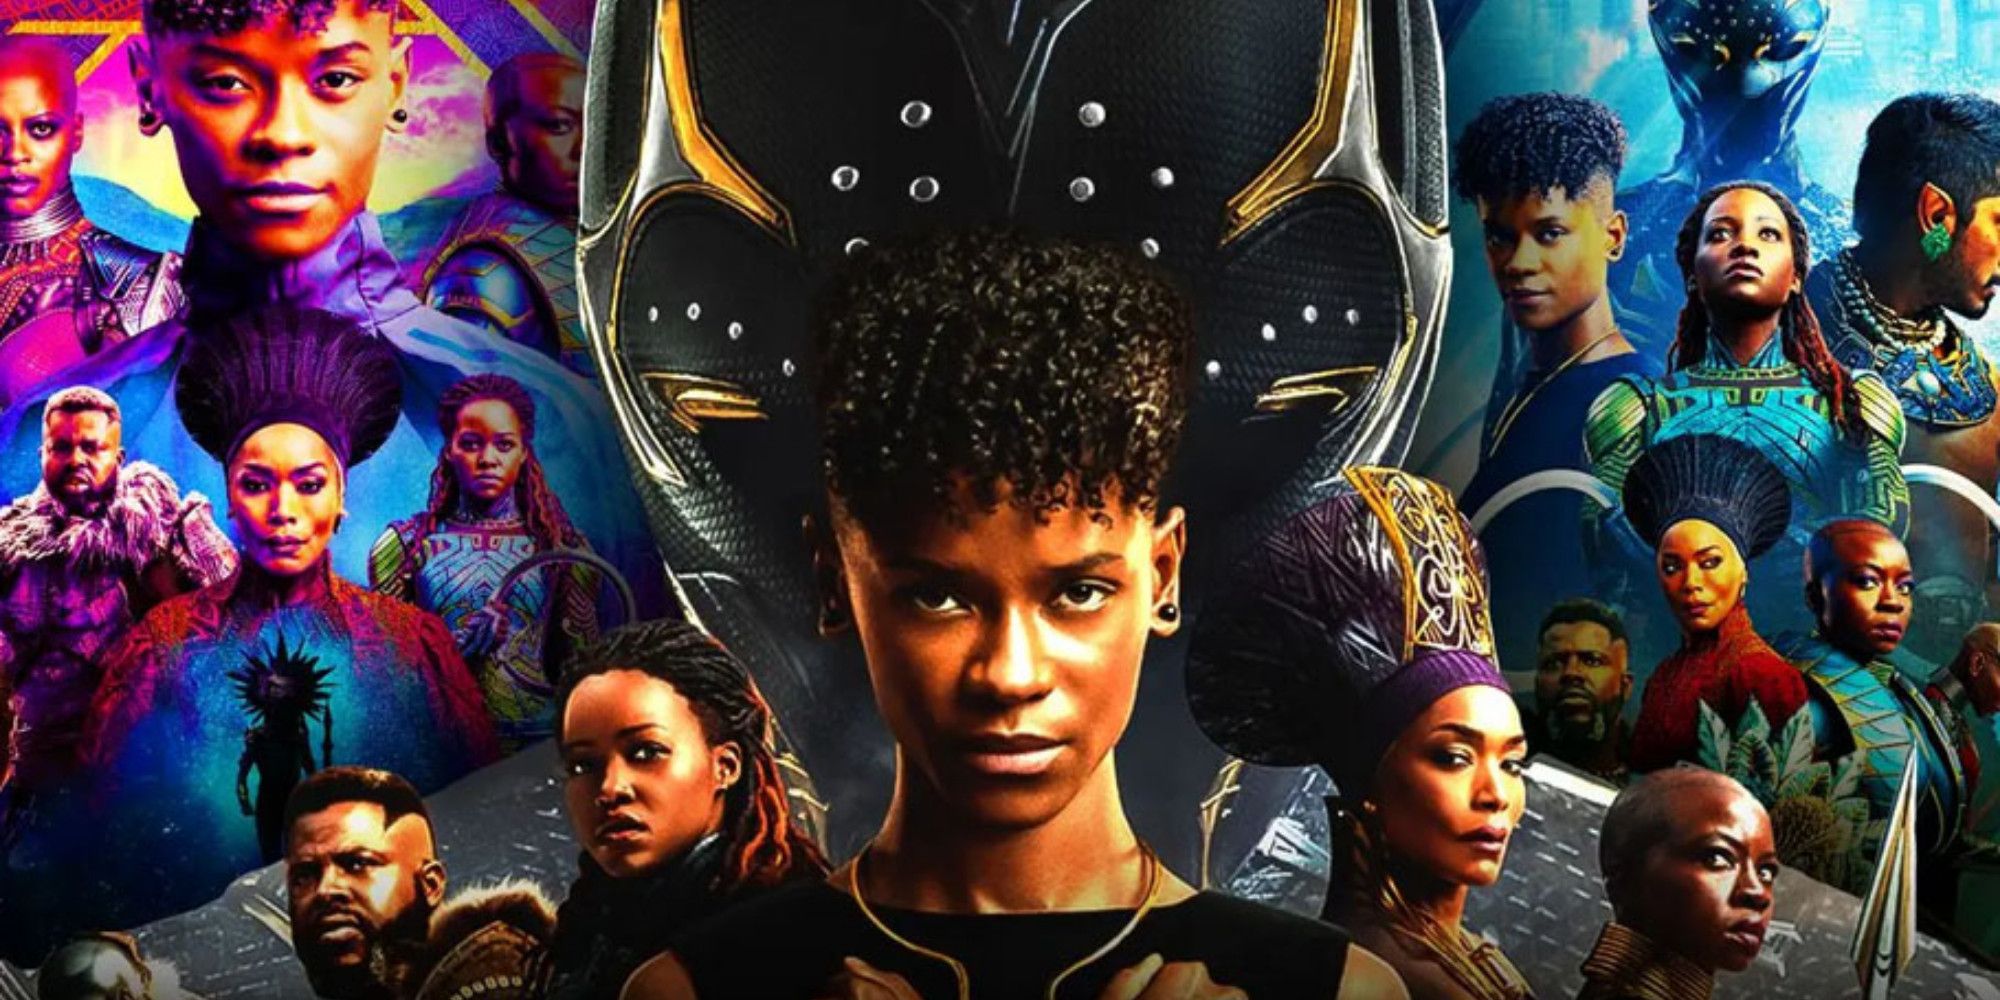 The cast of Black Panther: Wakanda Forever, including Letitia Wright, Lupita Nyong'o, & Angela Bassett, stand united